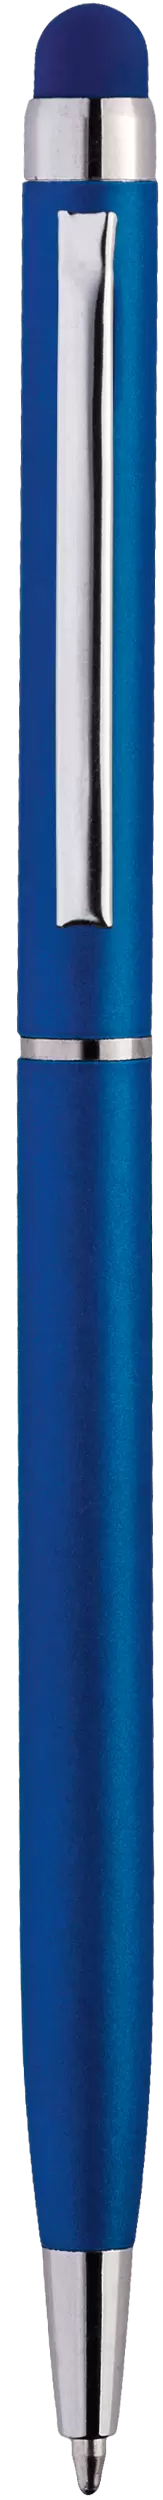 Ручка KENO Синяя 1115-01